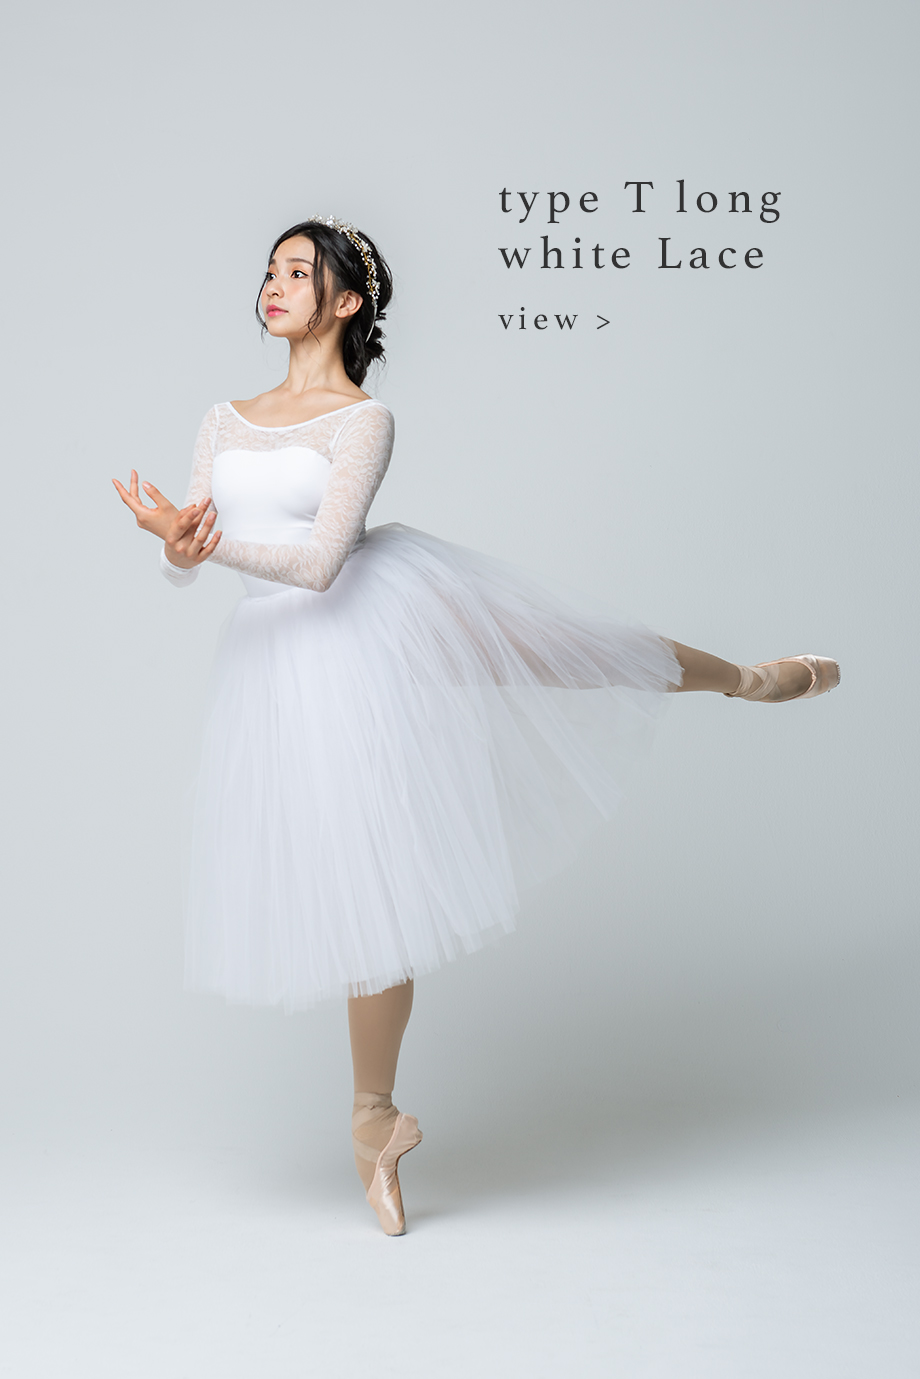 stina / type T long / white Lace